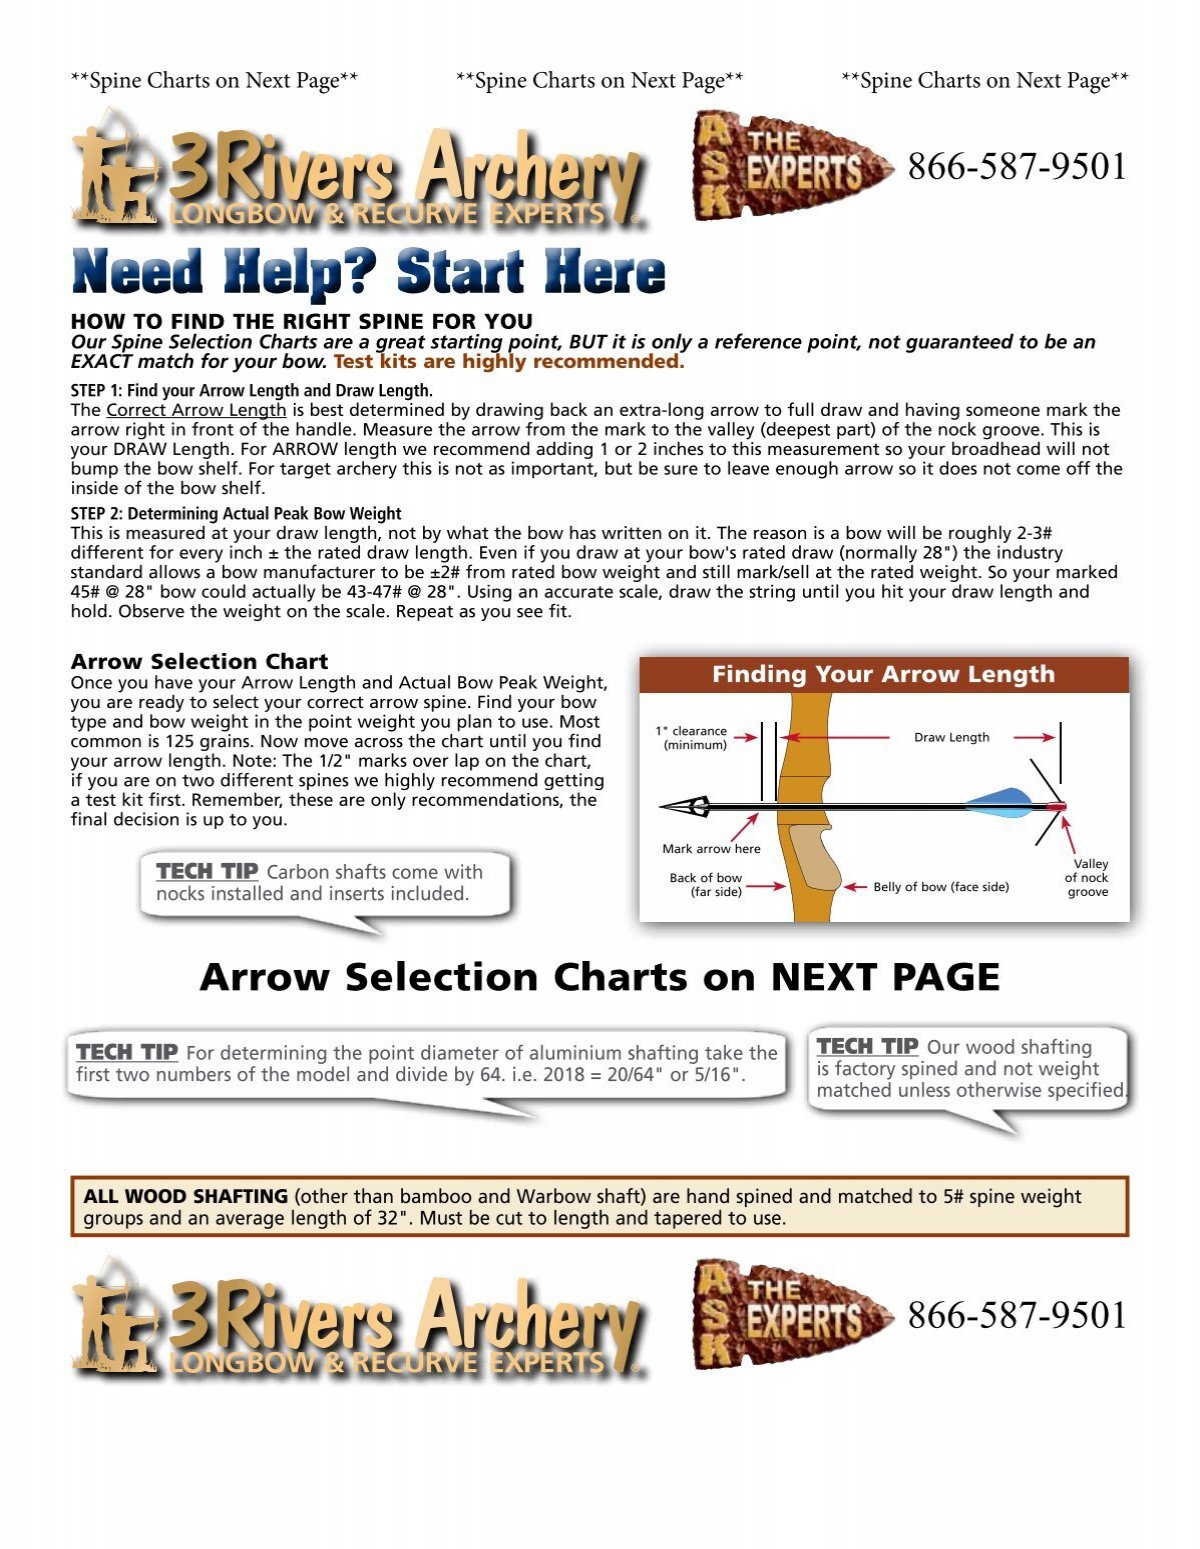 Arrow Spine Charts Three Rivers Archery